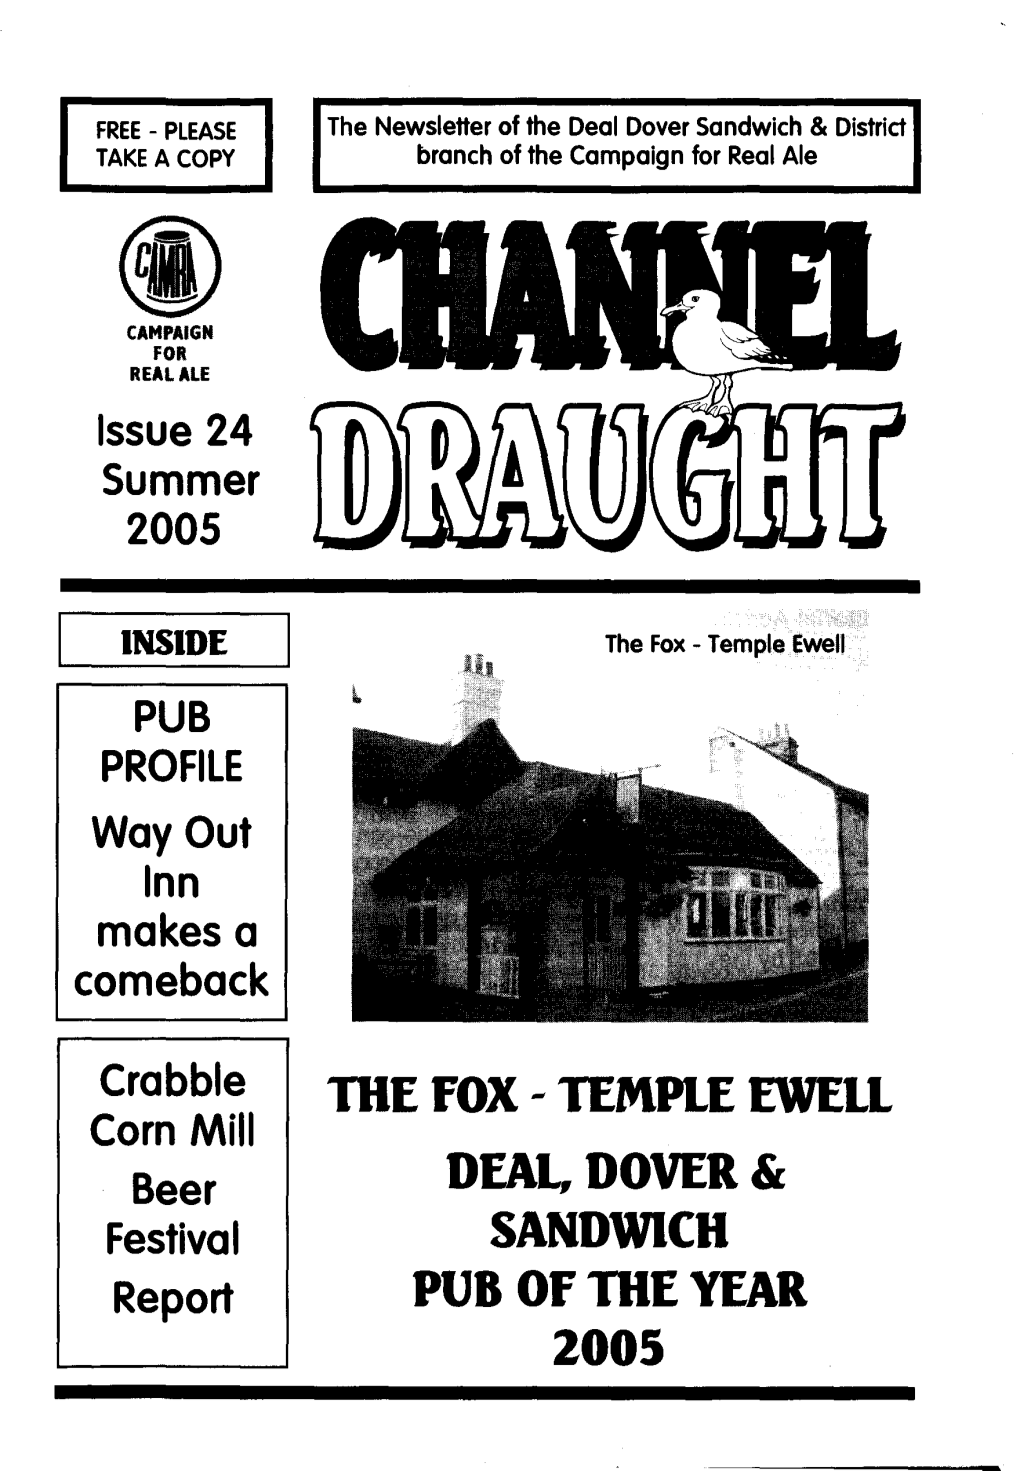 Temple Ewell Deal, Dover & Sandwich Pub